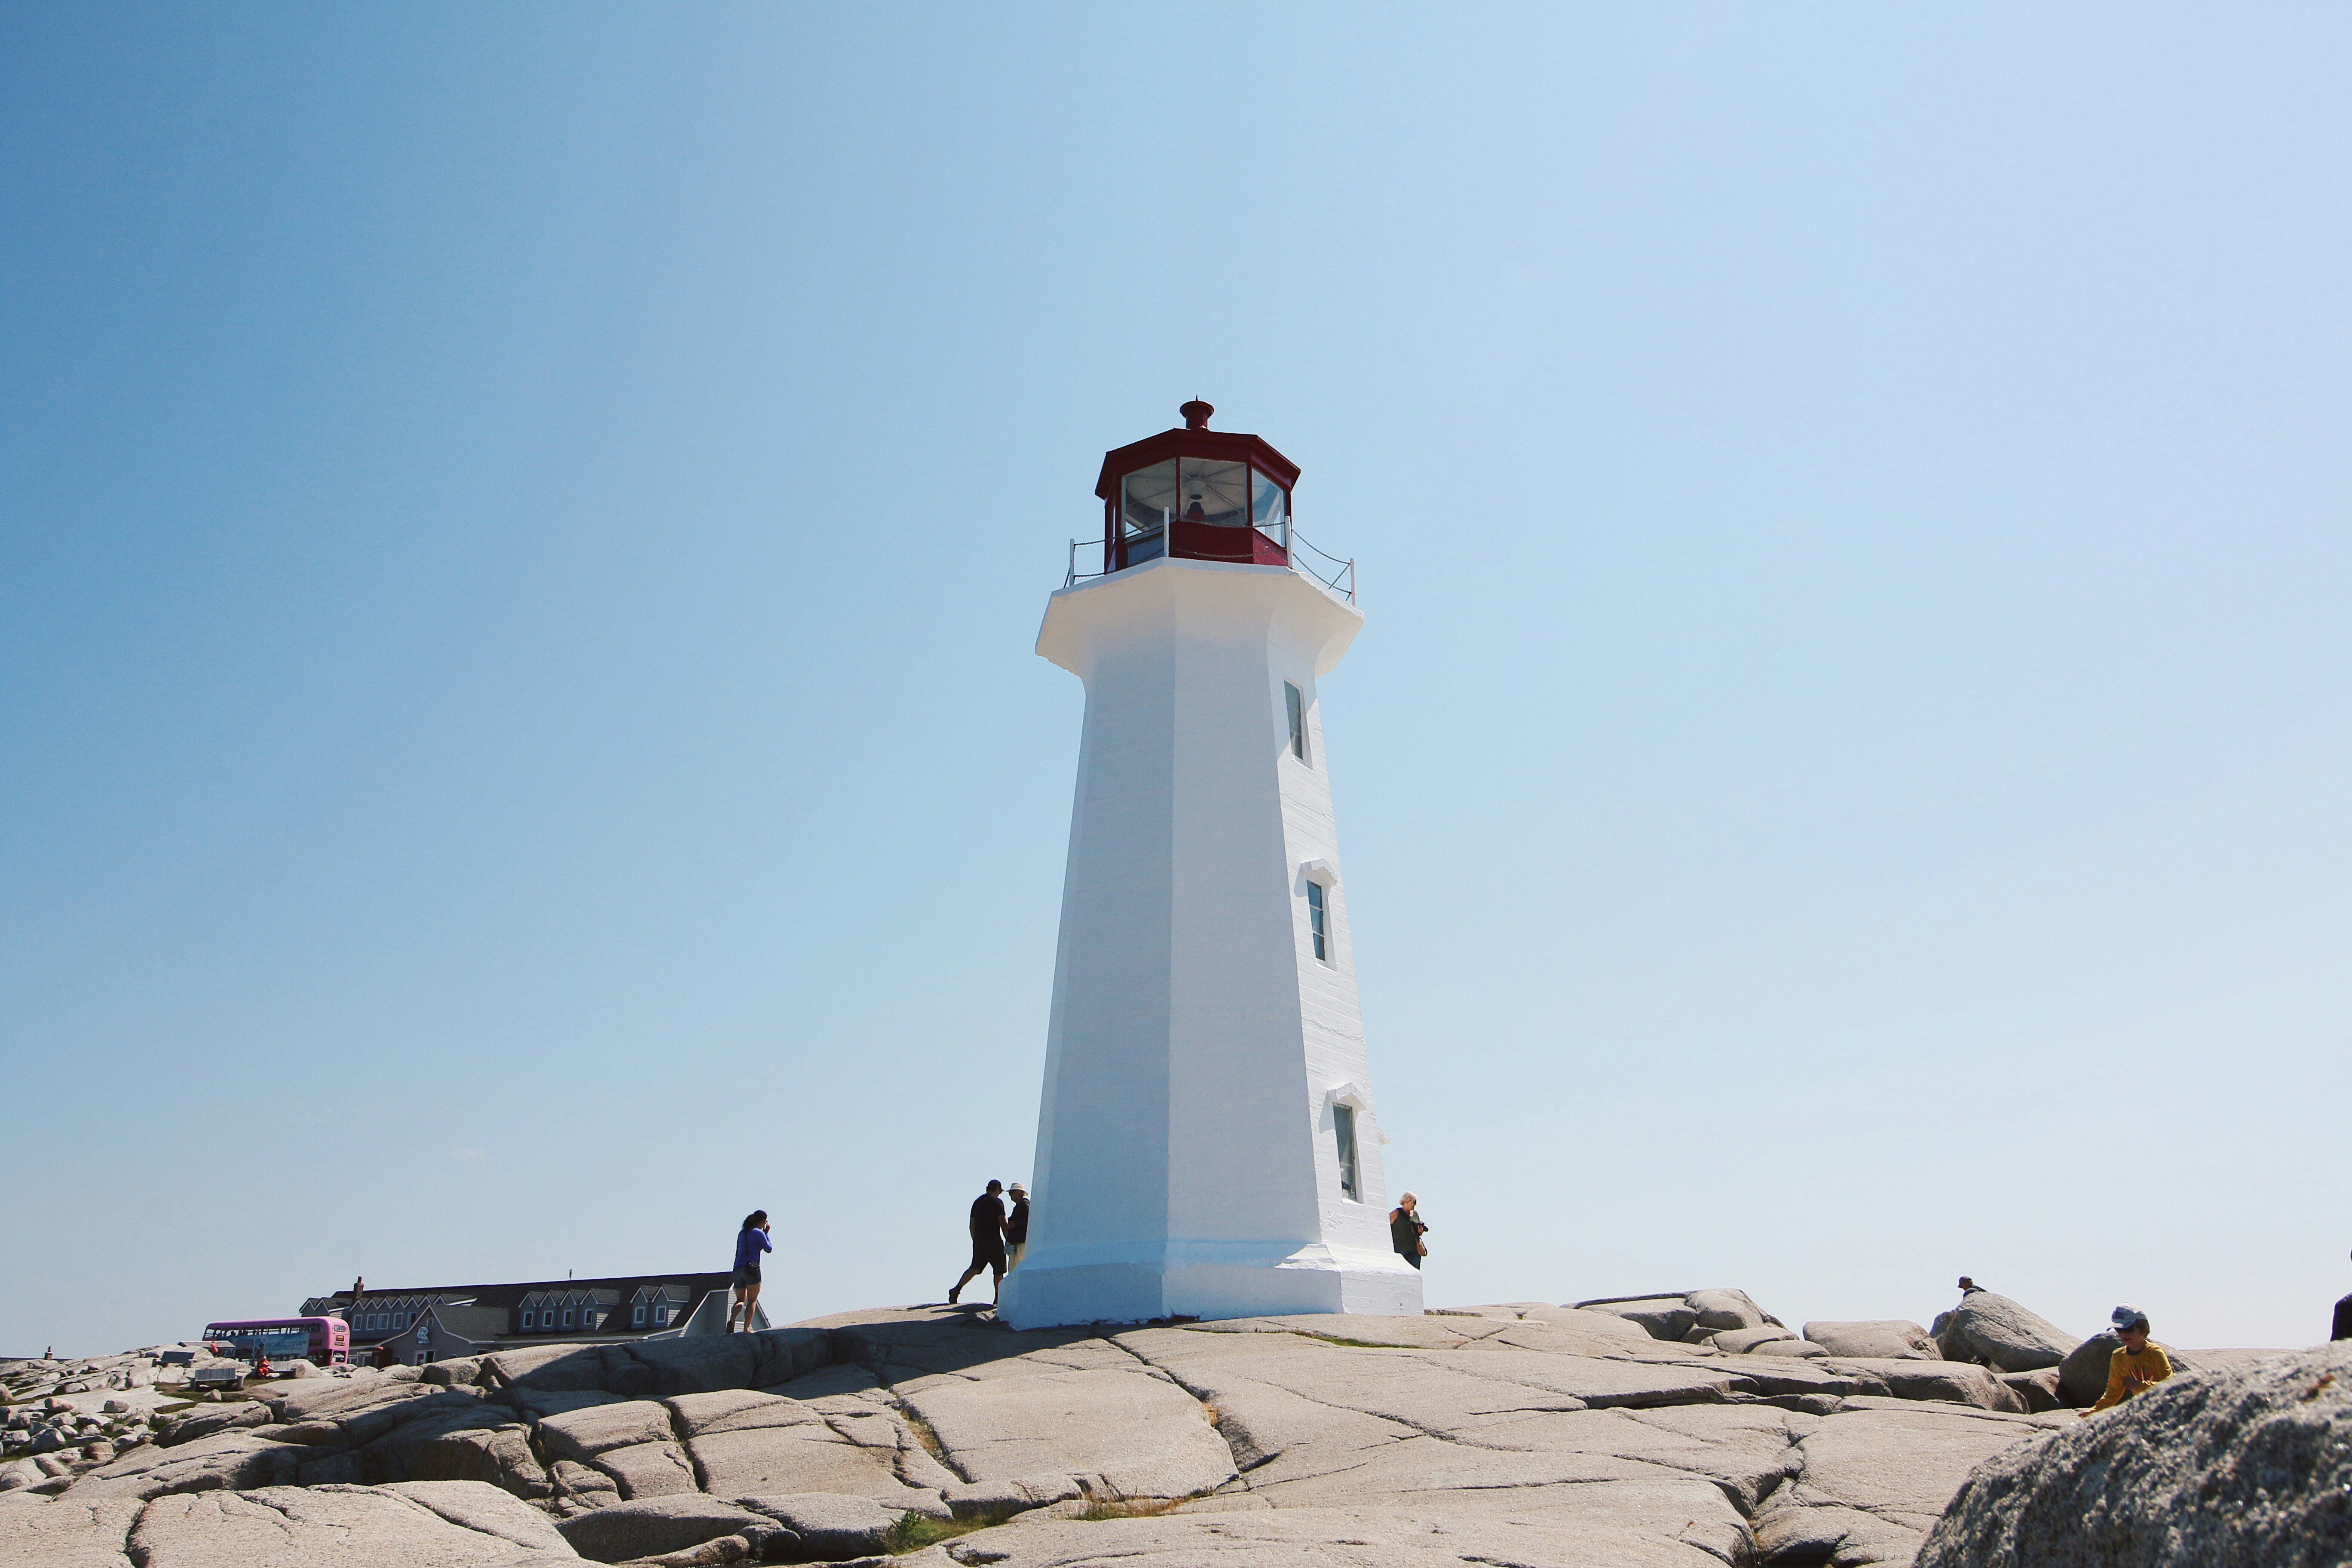 Lighthouse in Nova Scotia, Canada